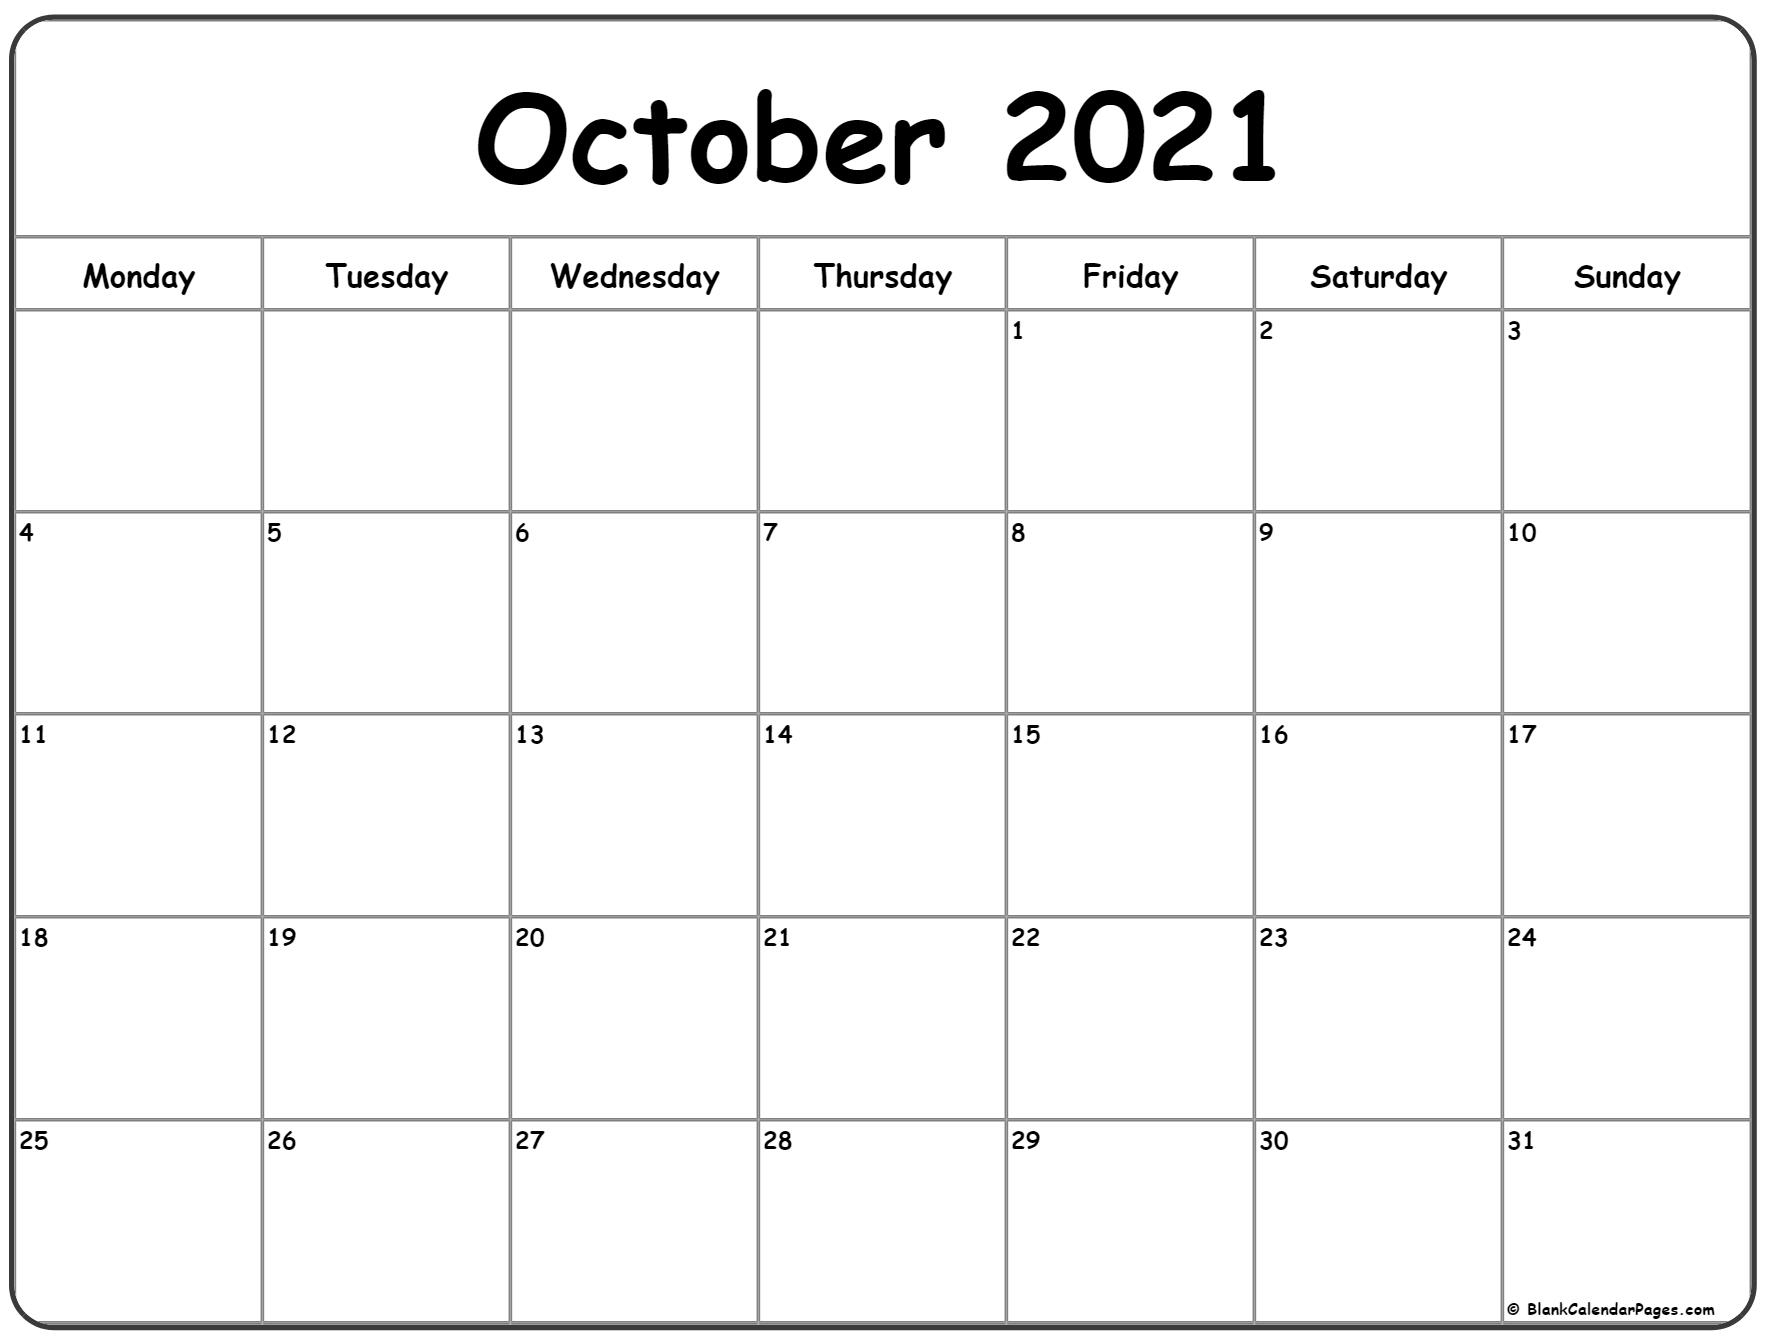 October 2021 Monday Calendar | Monday To Sunday